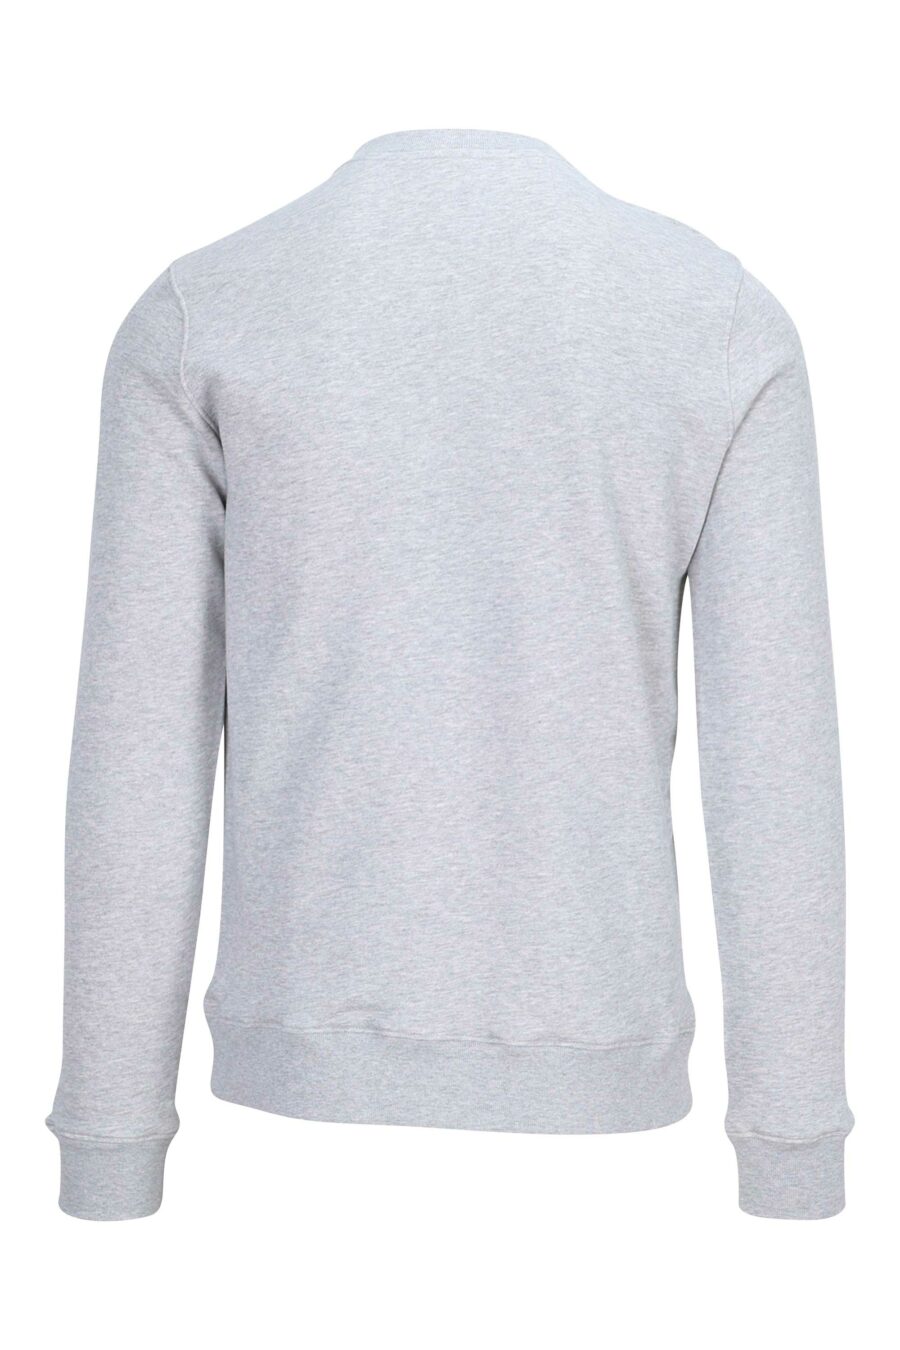 Grey sweatshirt with logo "teddy tailor" - 667113108315 1